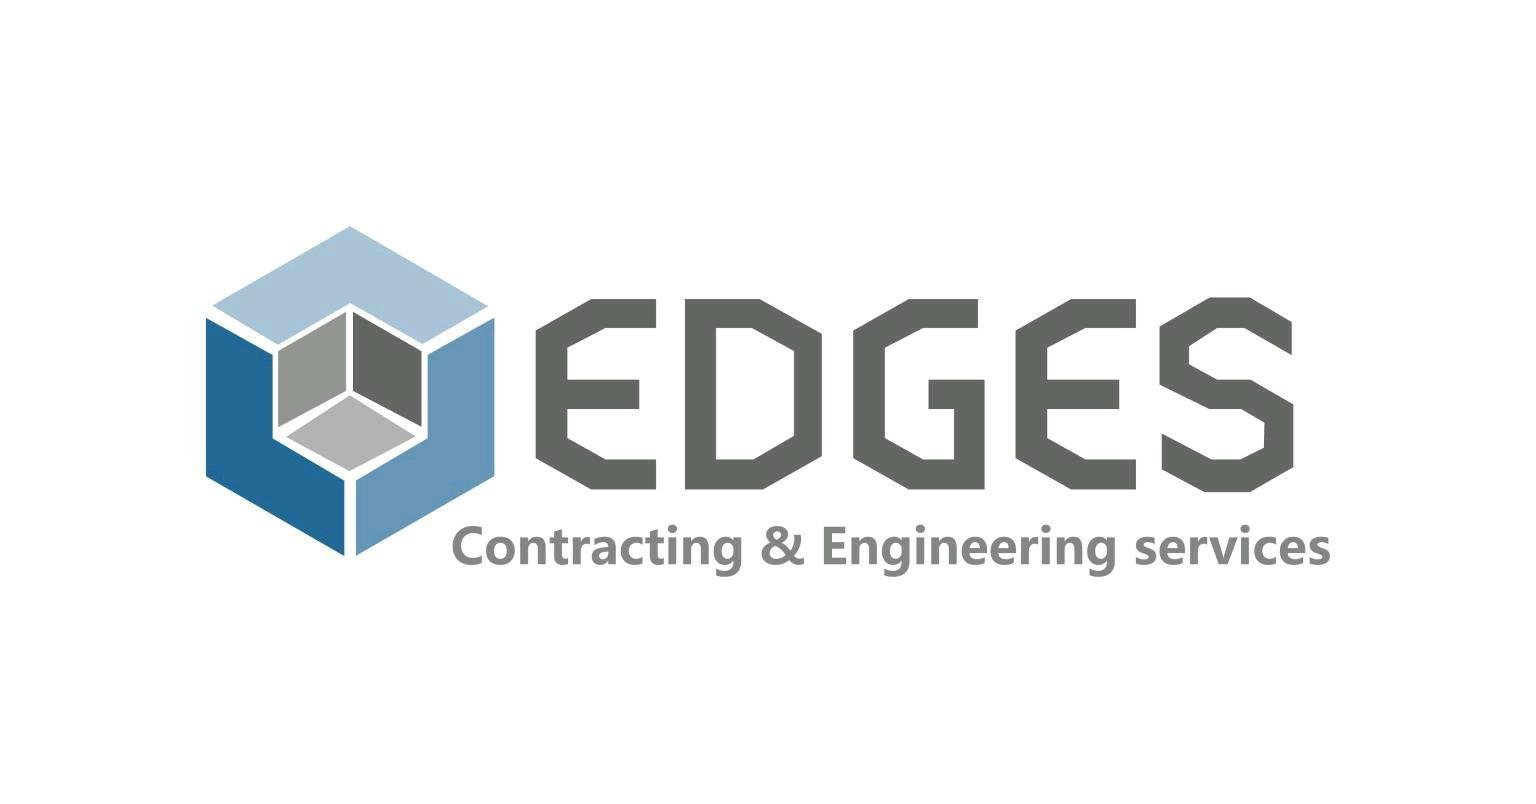 Lead engineering. Engineers Edge.